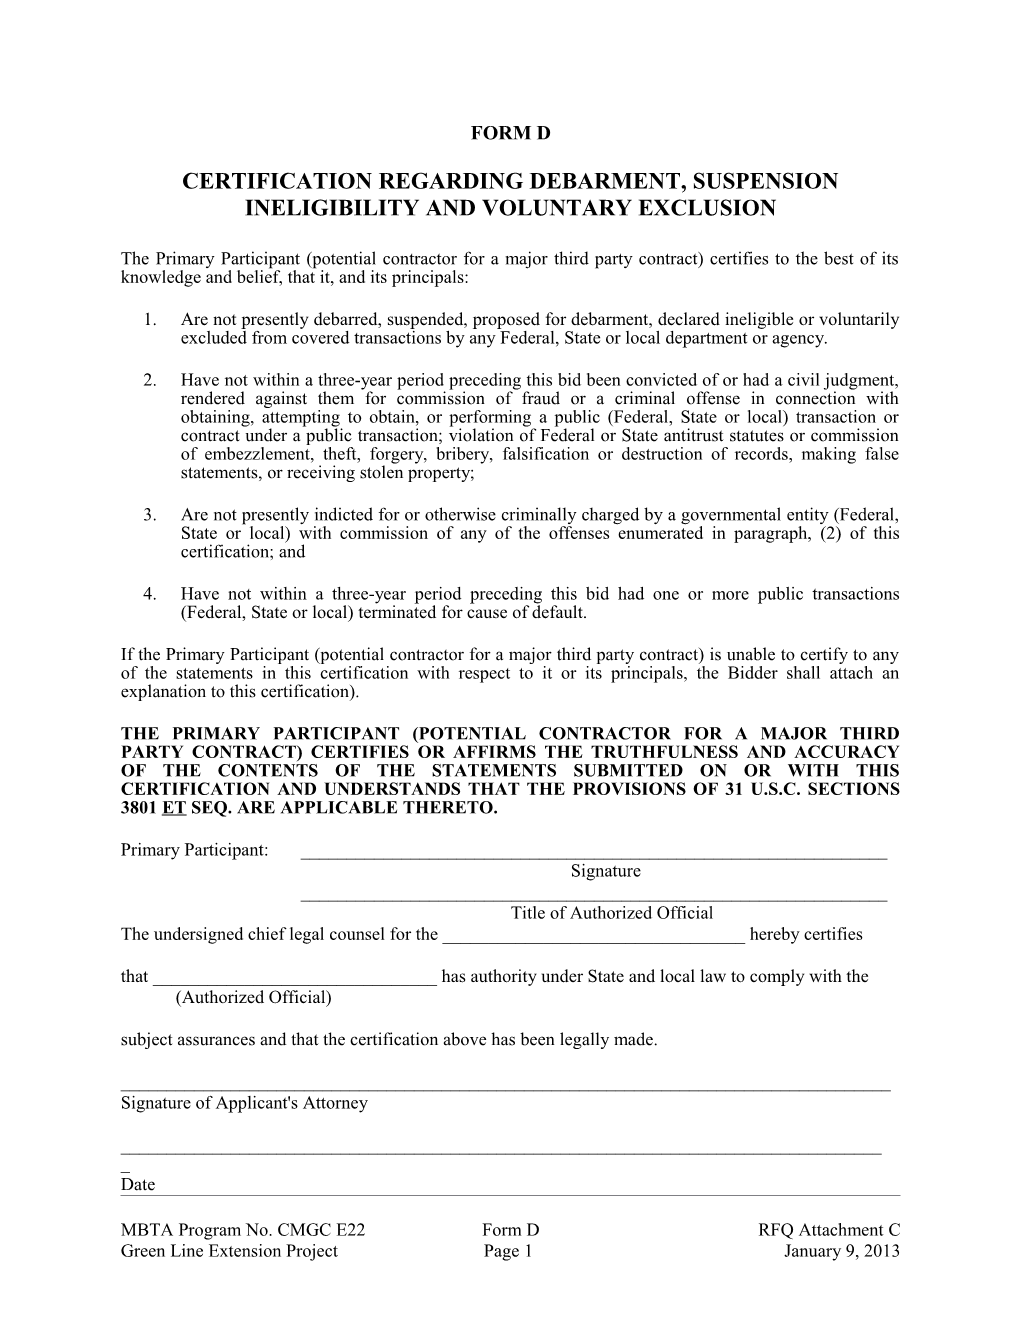 Certification Regarding Debarment, Suspension